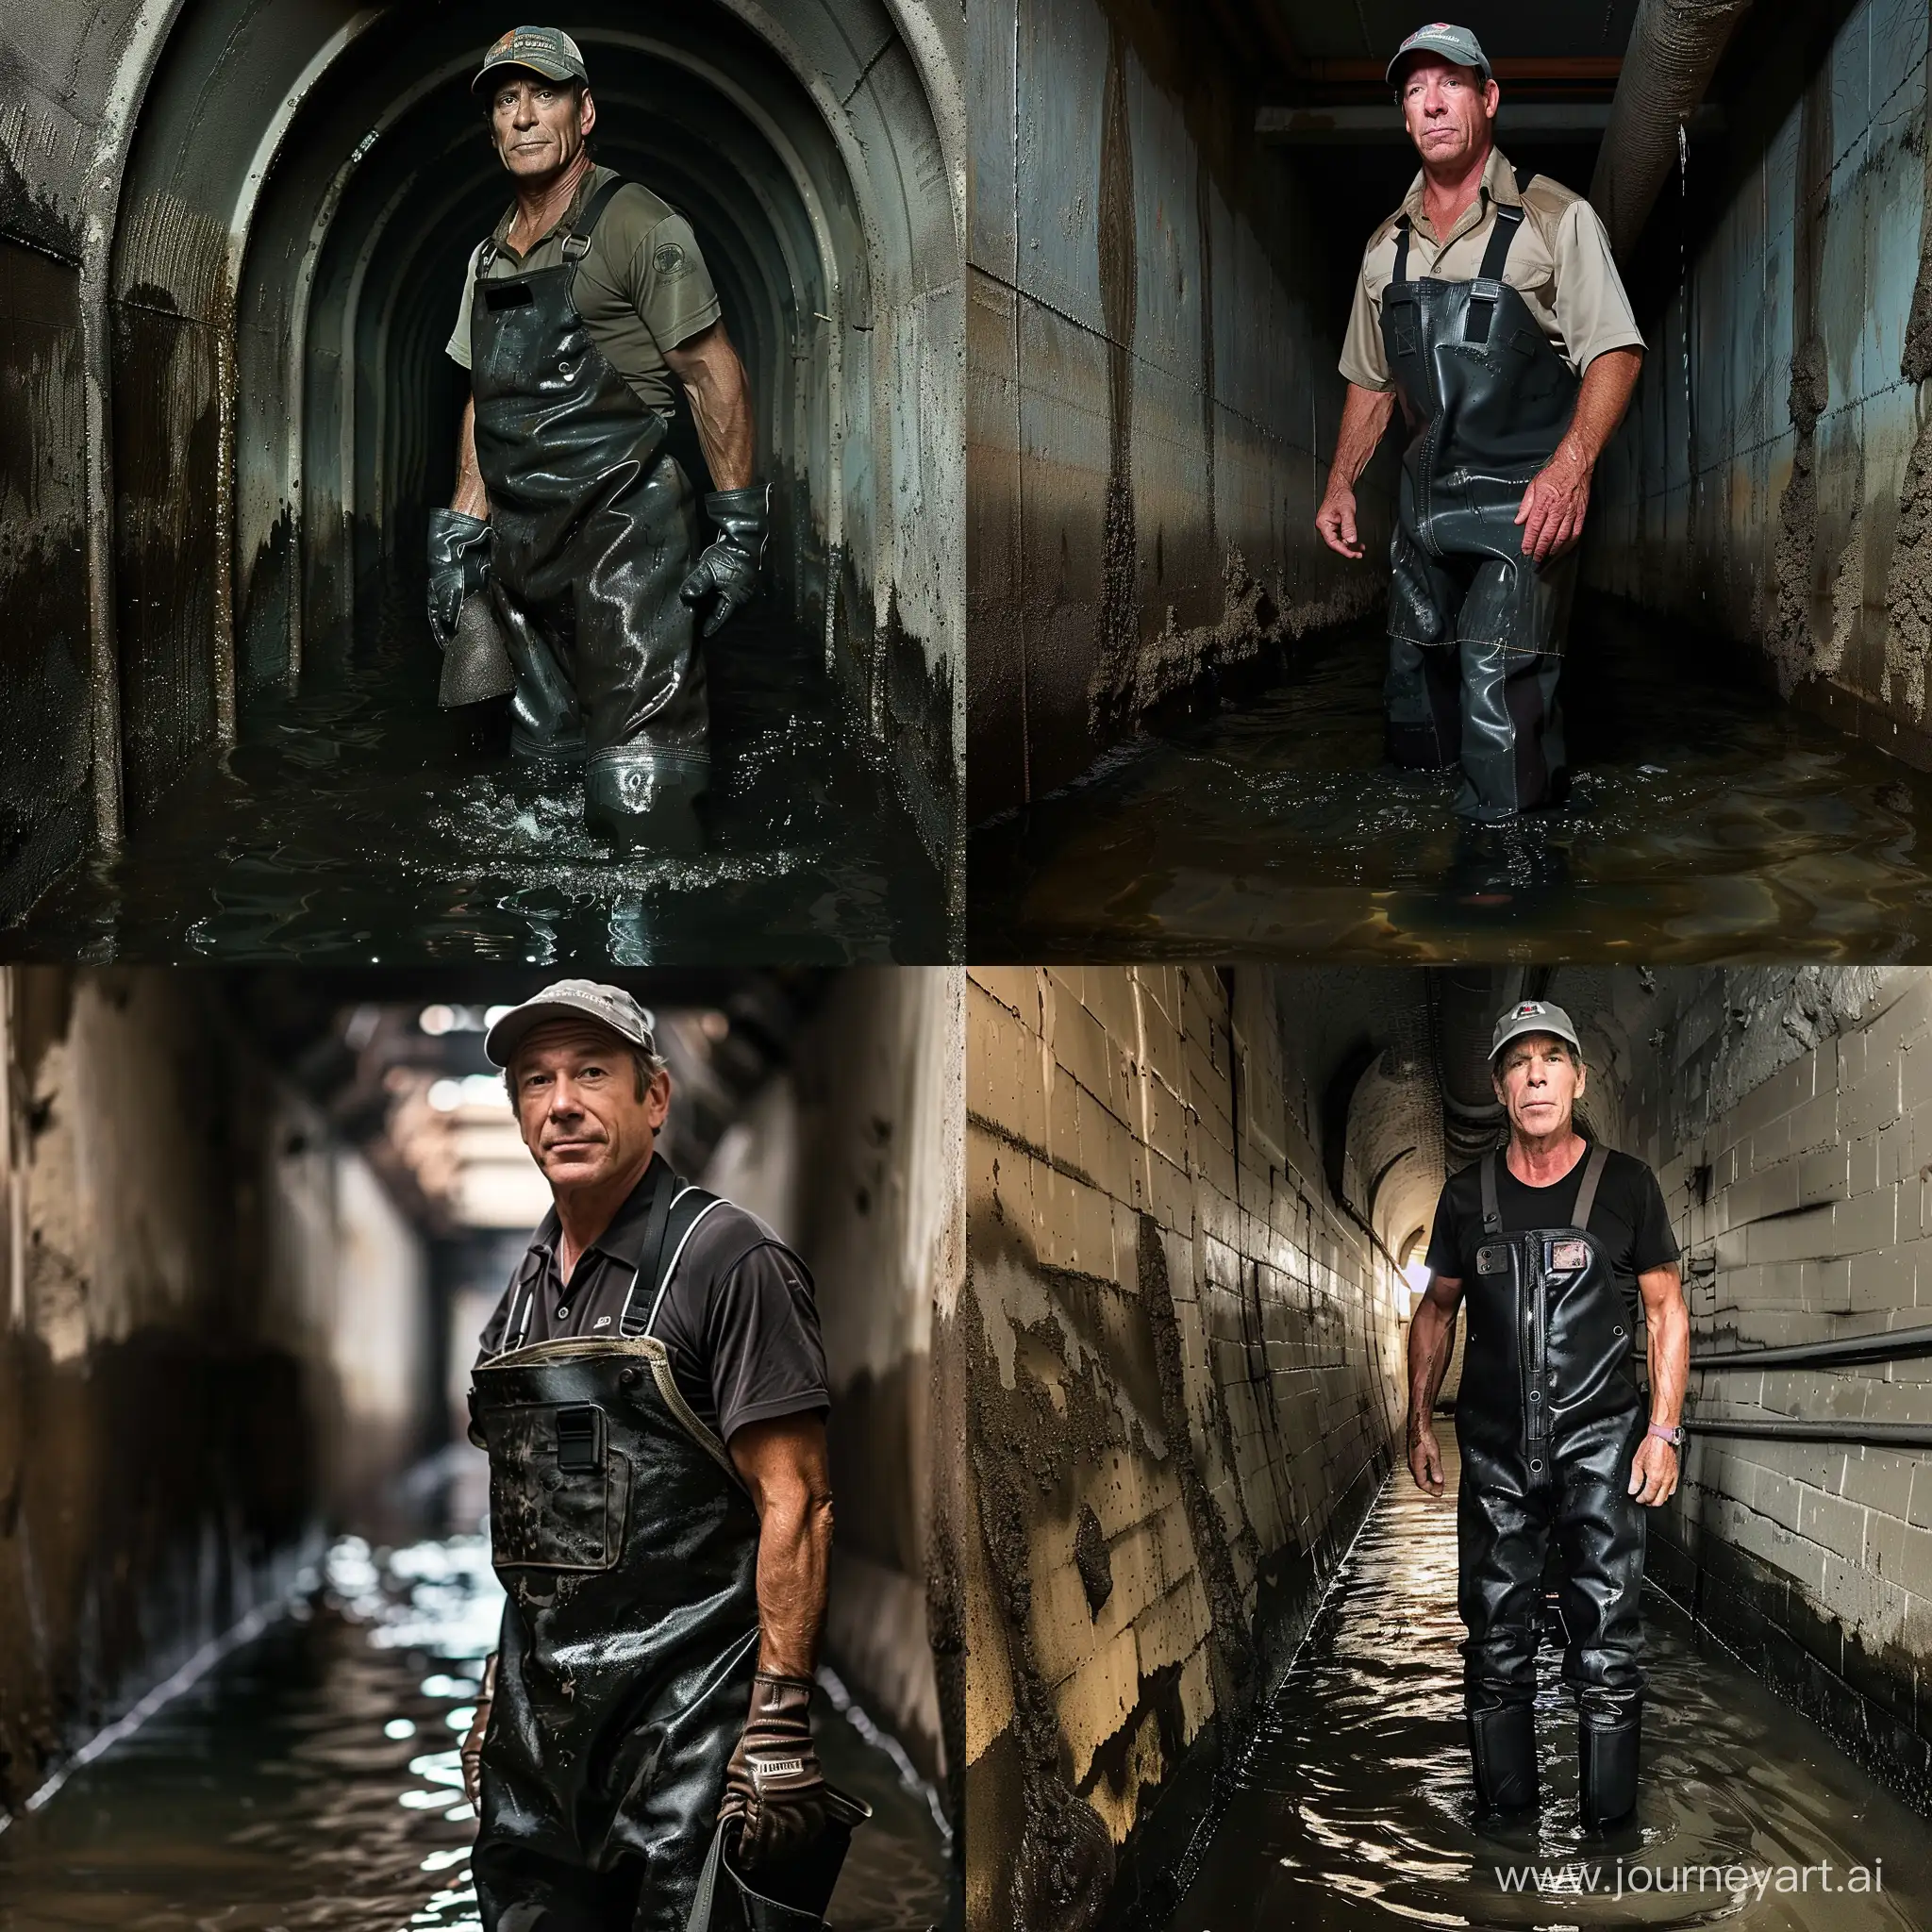 Mike-Rowe-Wearing-Waders-Exploring-Sewer-Environment